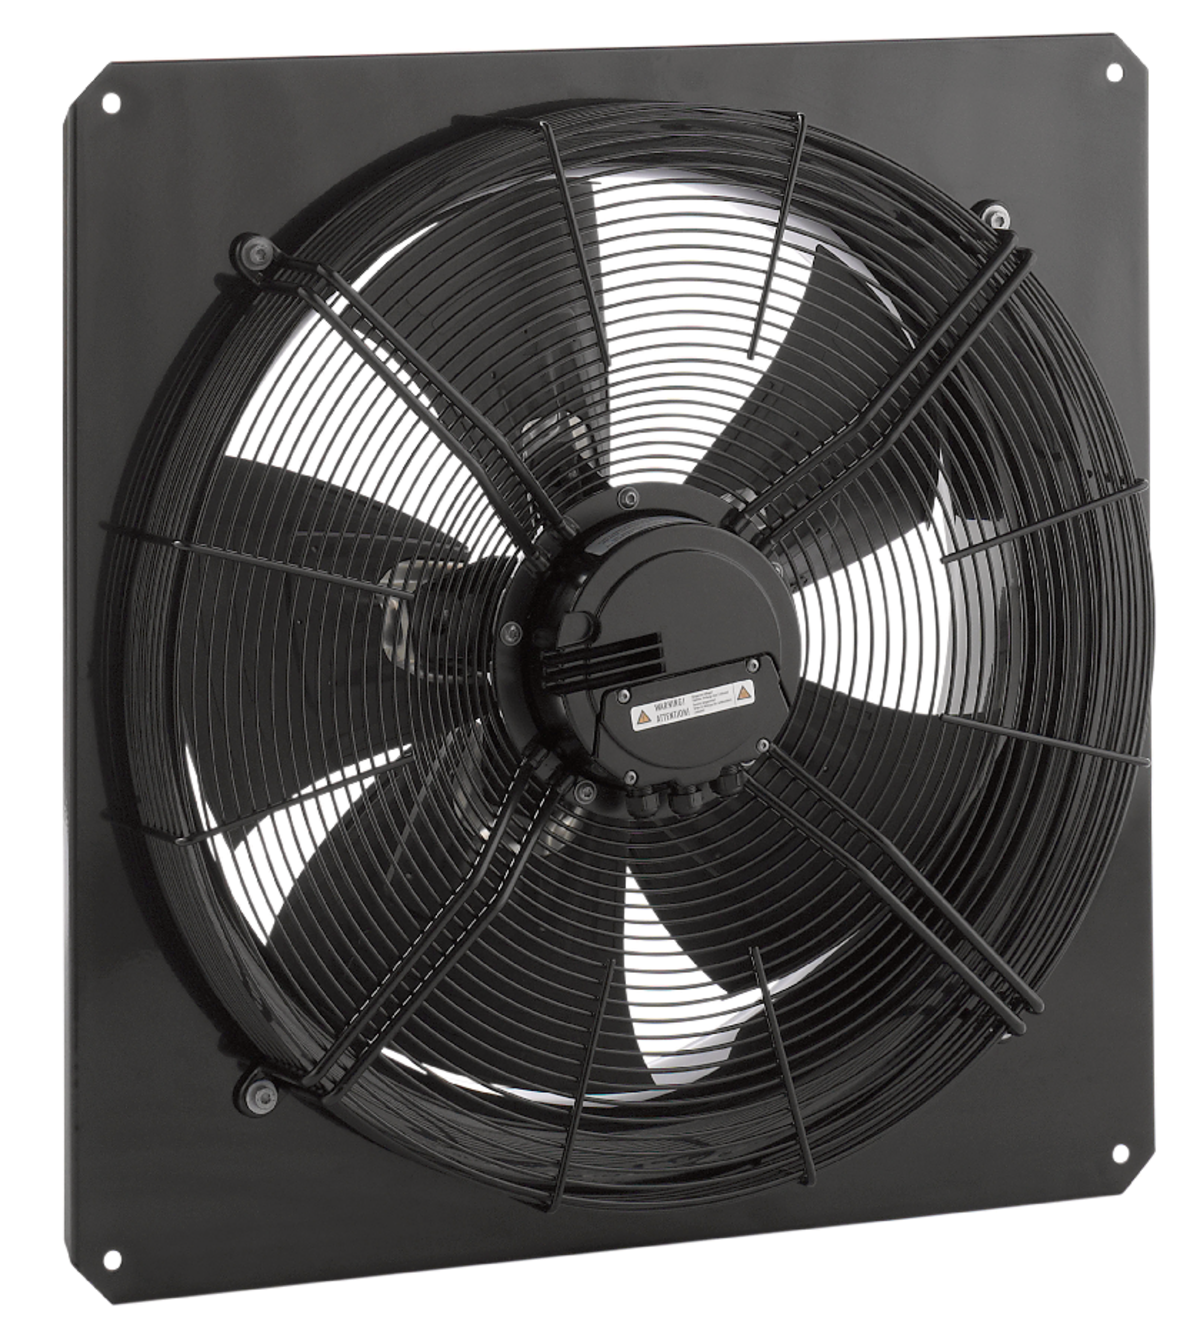 AW - Axiale ventilatoren - Ventilatoren & Accessoires - Producten - Systemair